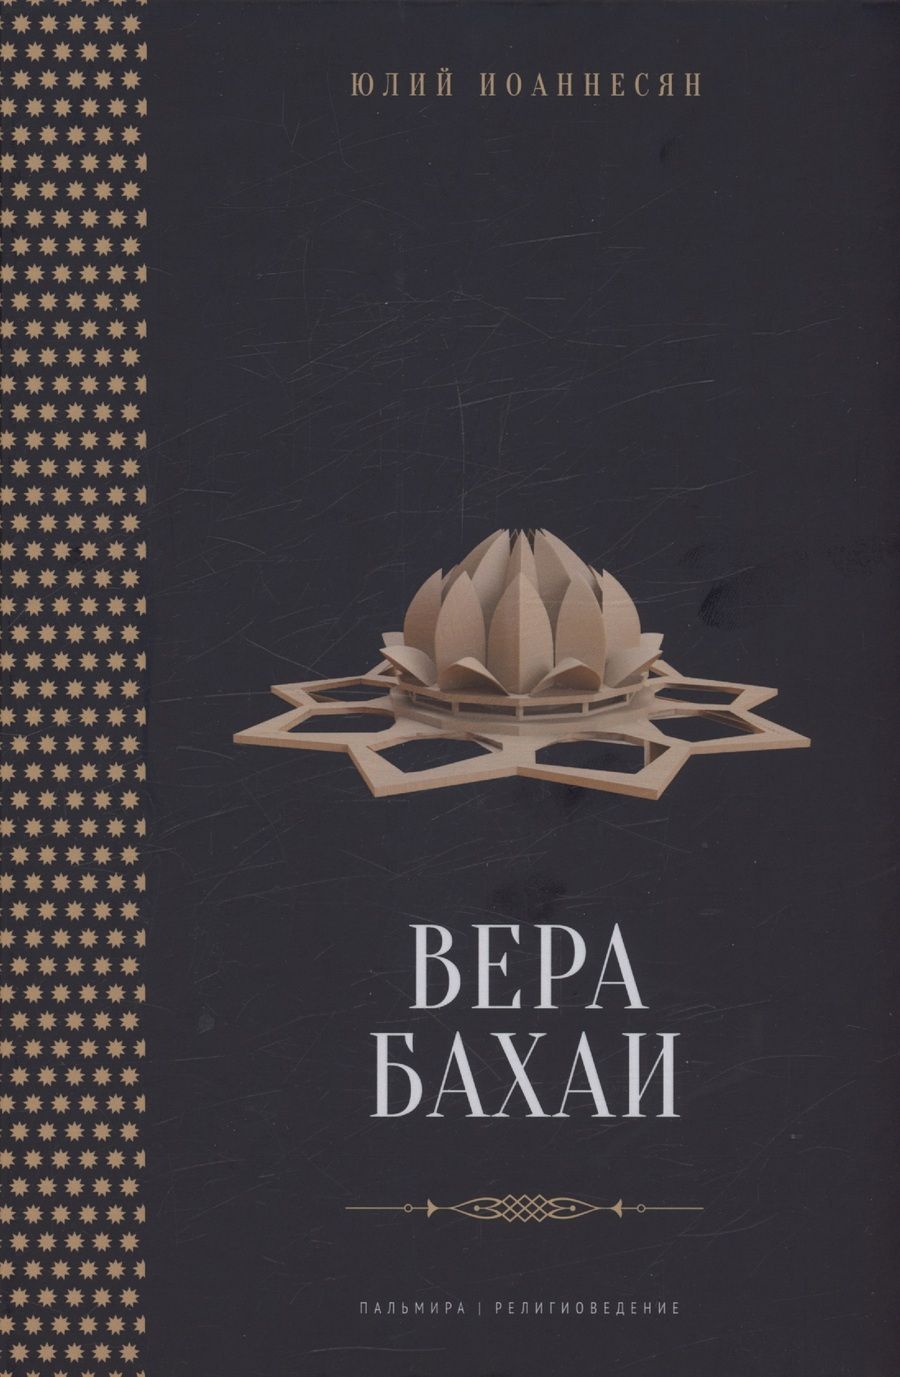 Обложка книги "Иоаннесян: Вера бахаи"